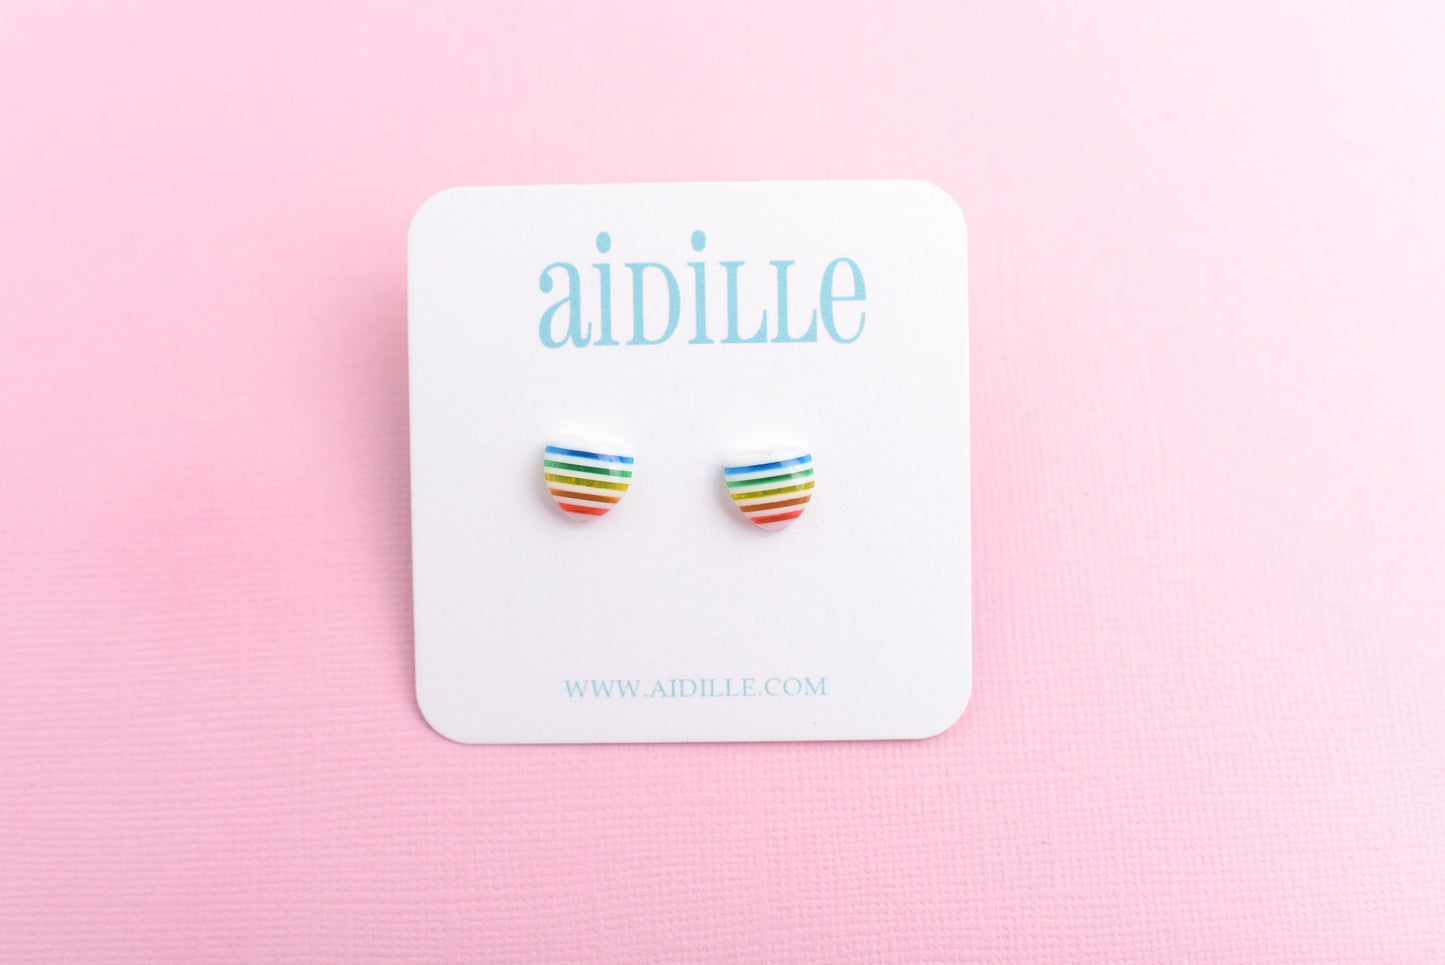 Rainbow Heart Earrings, 10mm Colorful Titanium Studs for Sensitive Ears, Girlfriend Gift Idea